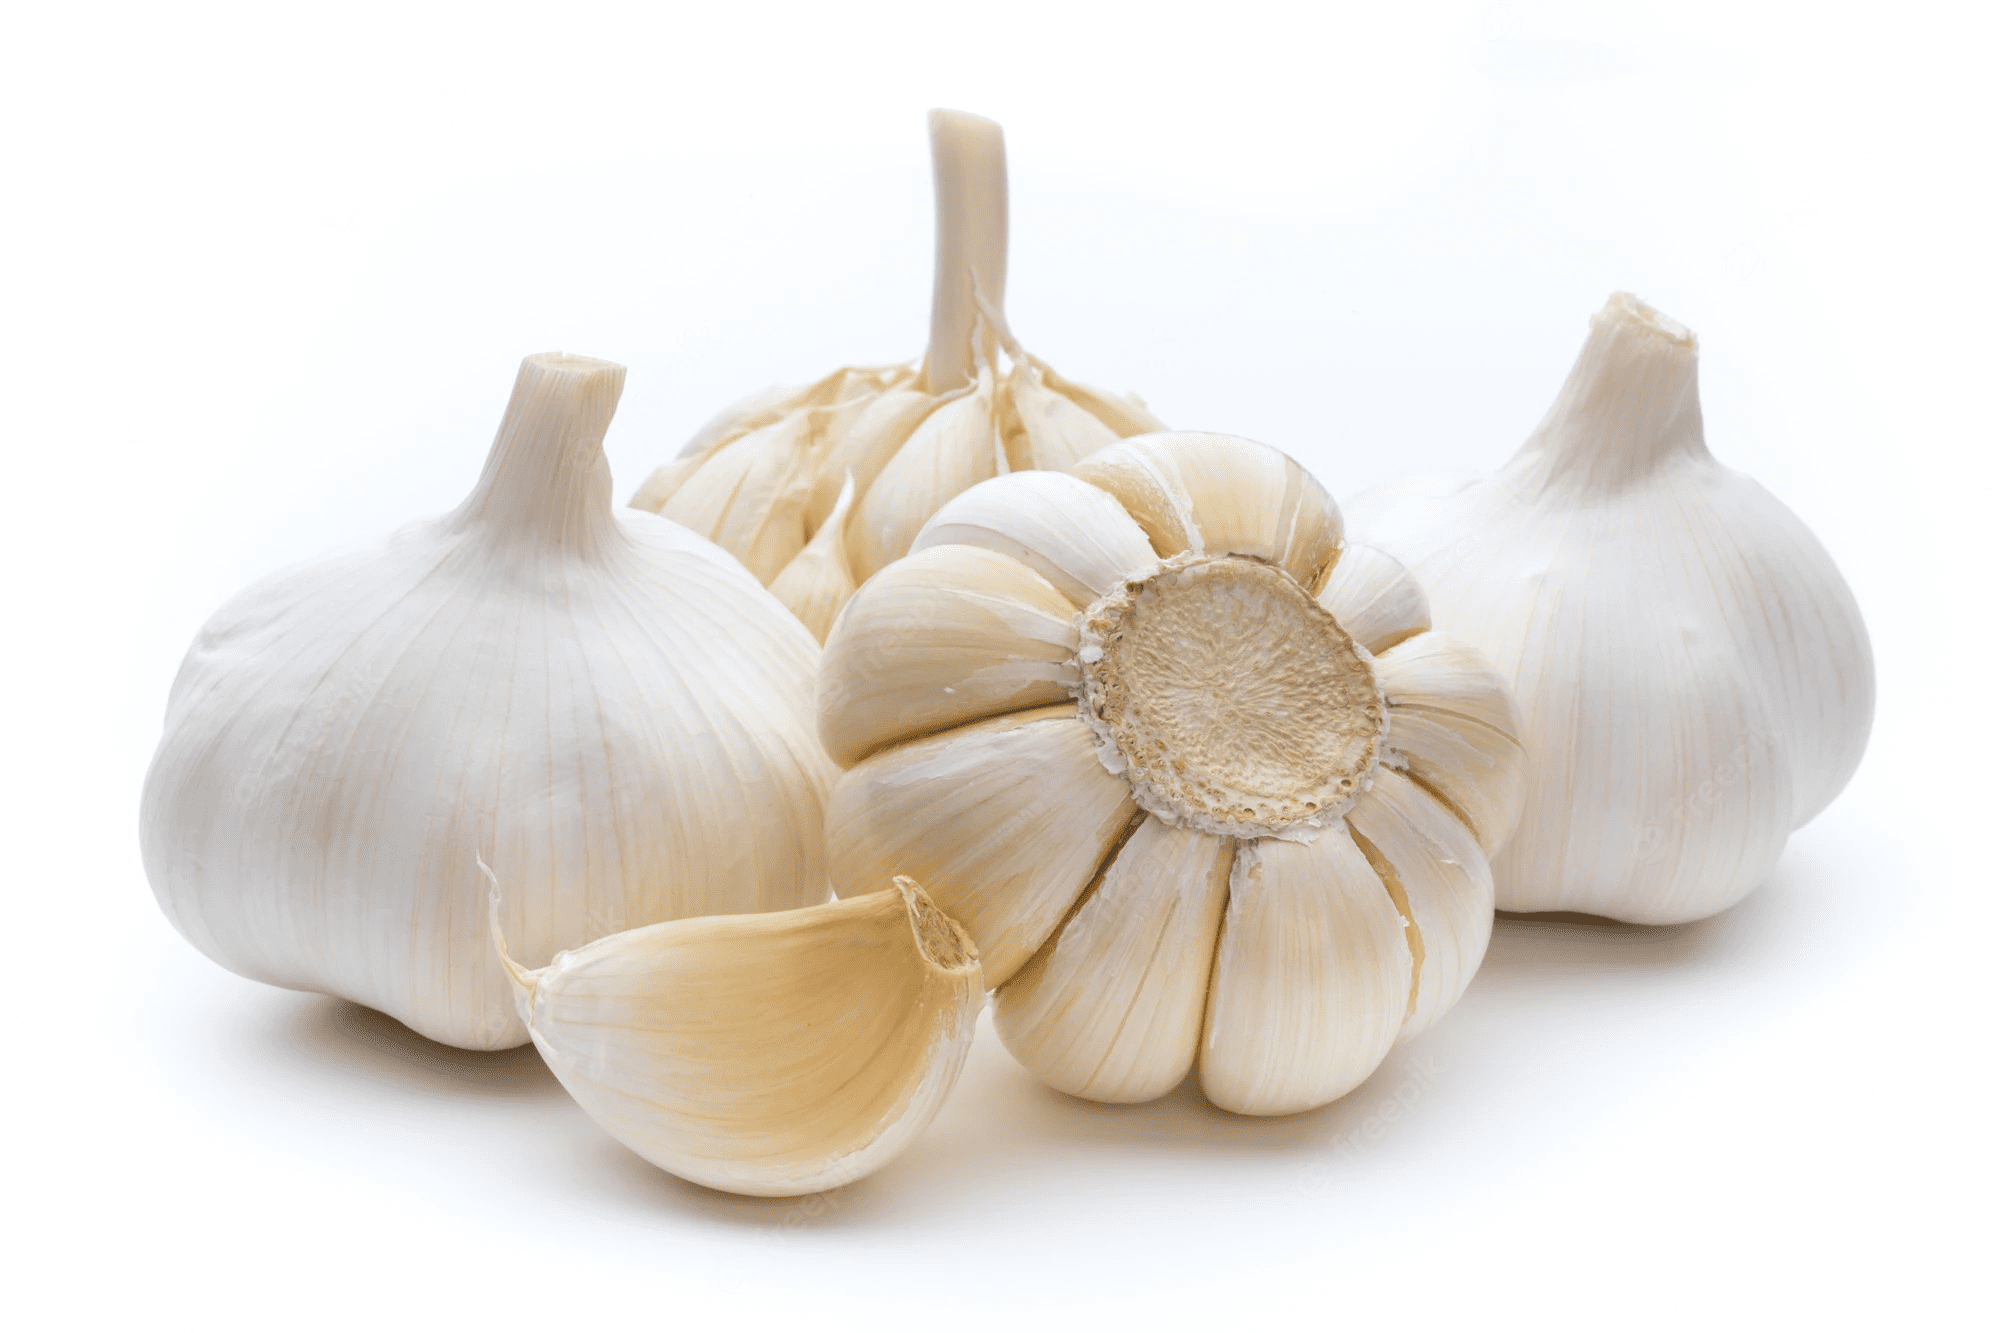 Surprising Health Benefits of Garlic